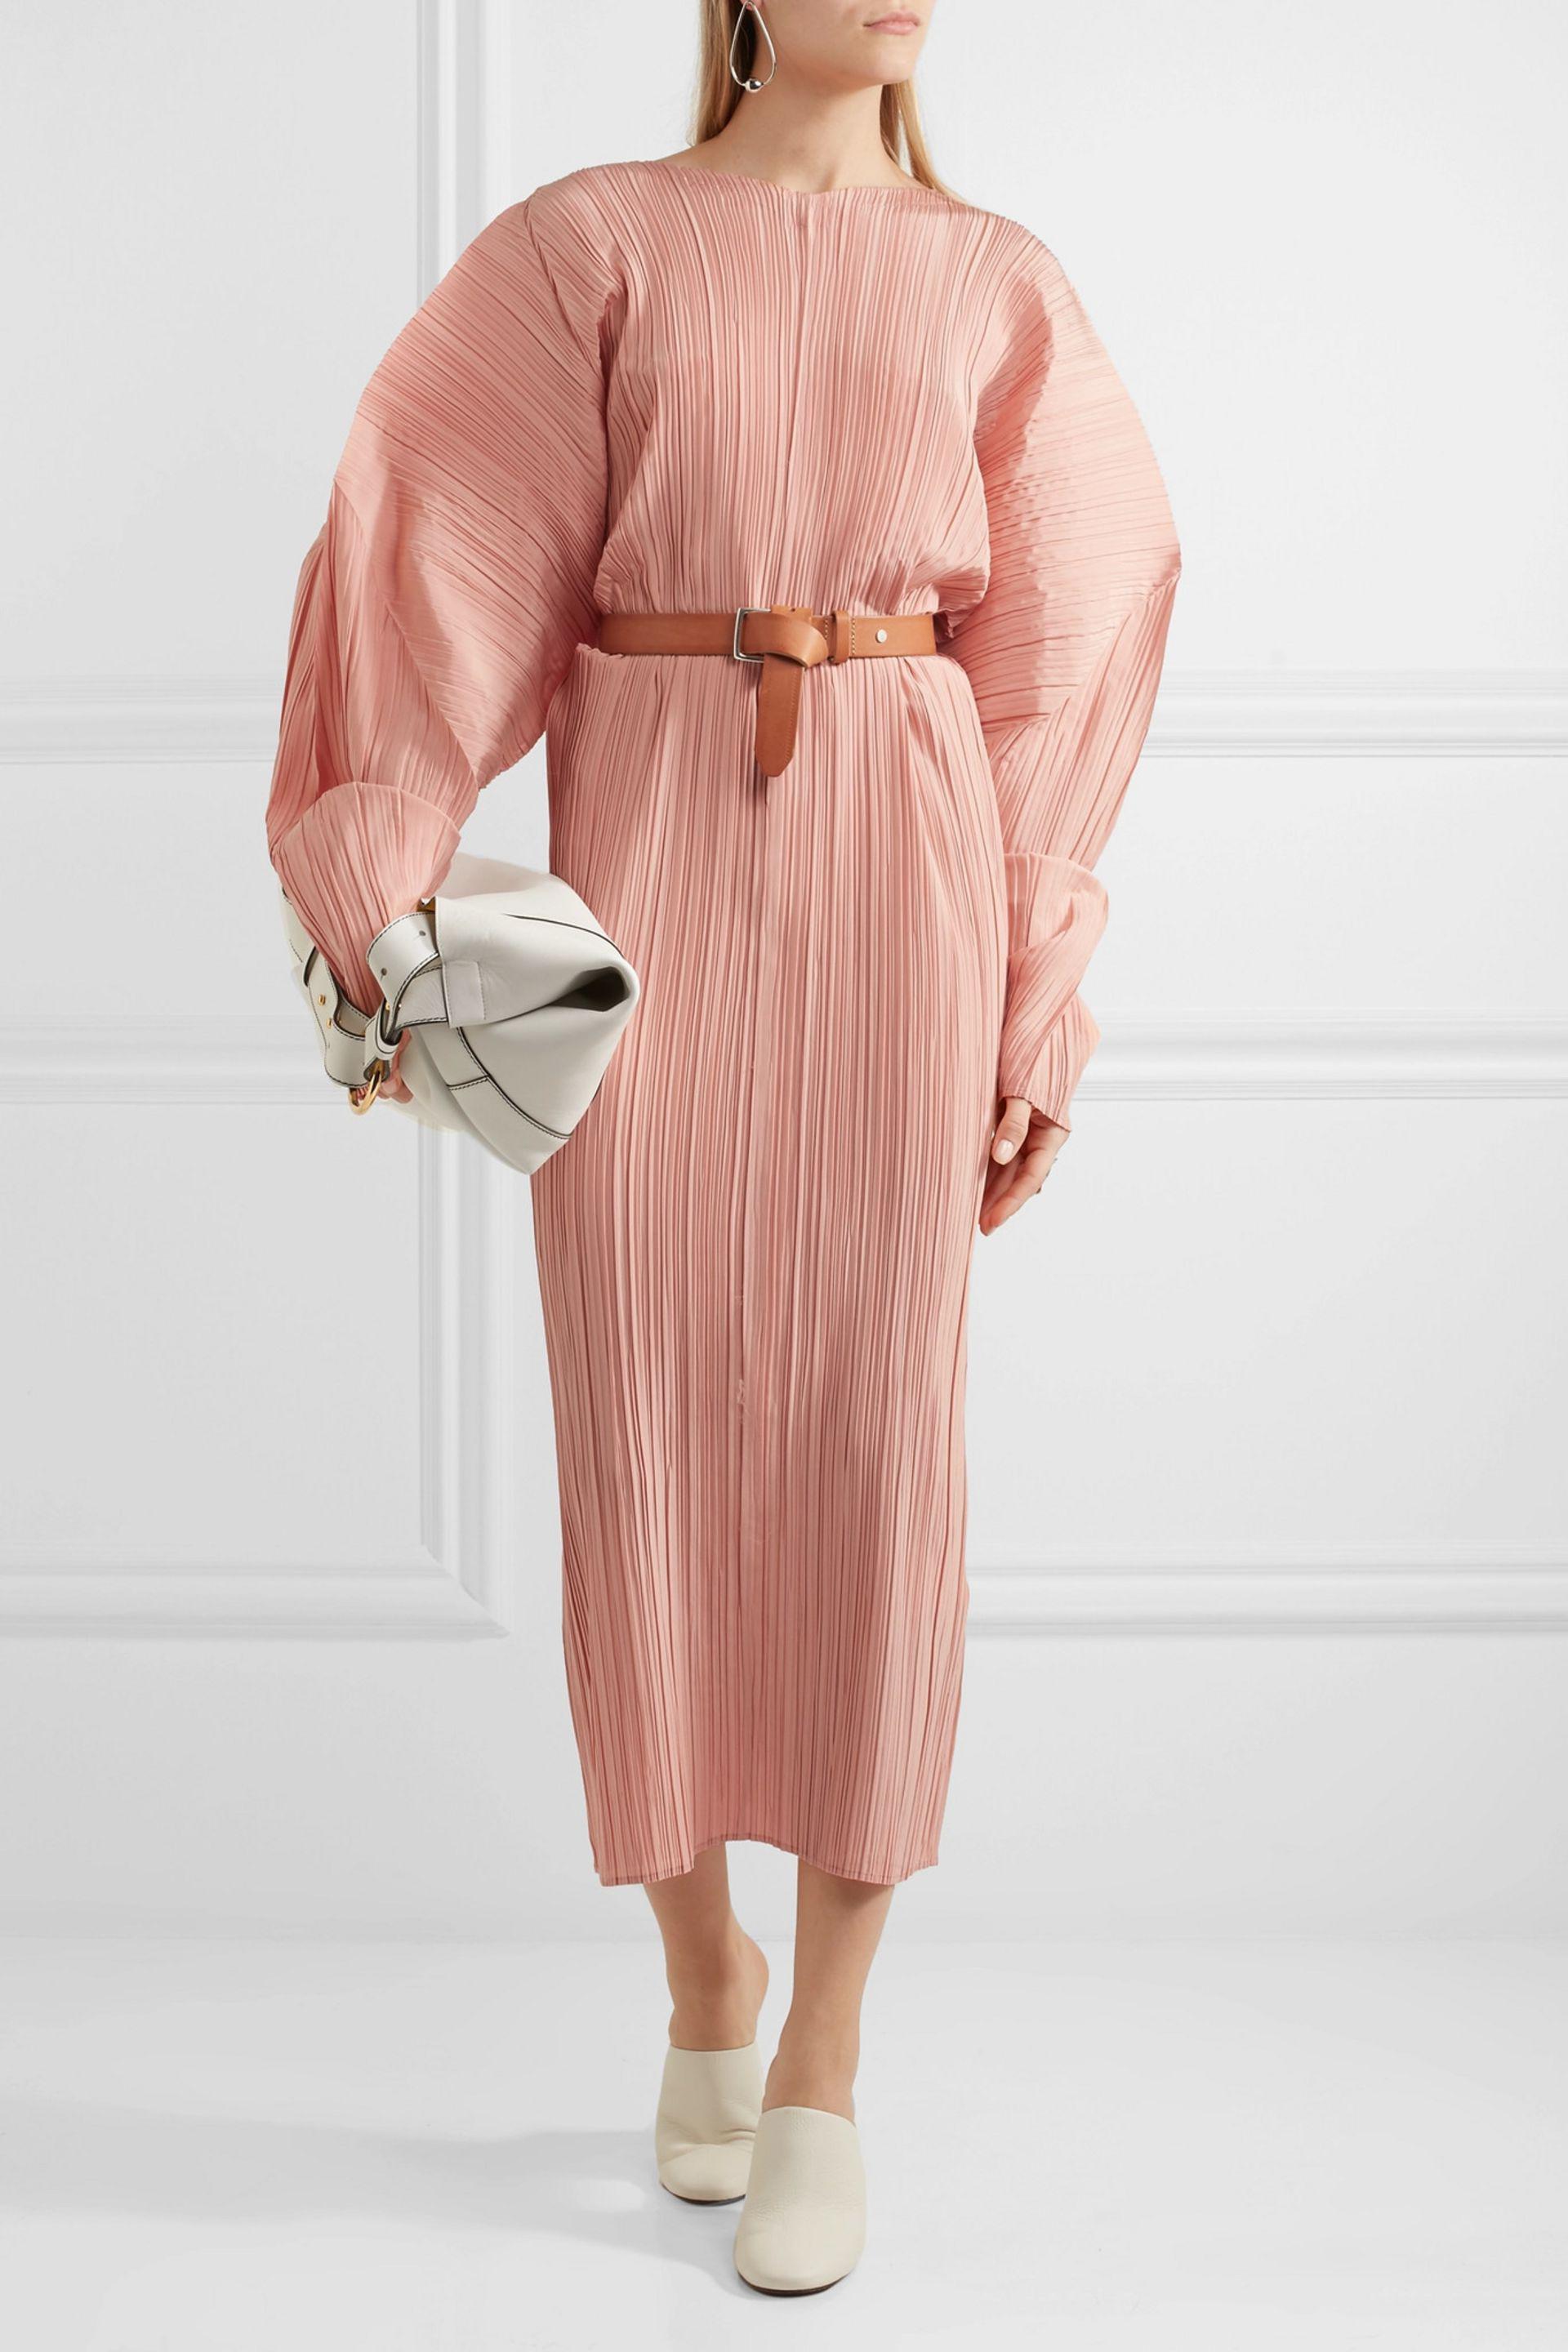 Jil Sander Plissé-silk Midi Dress in Antique Rose (Pink) - Lyst